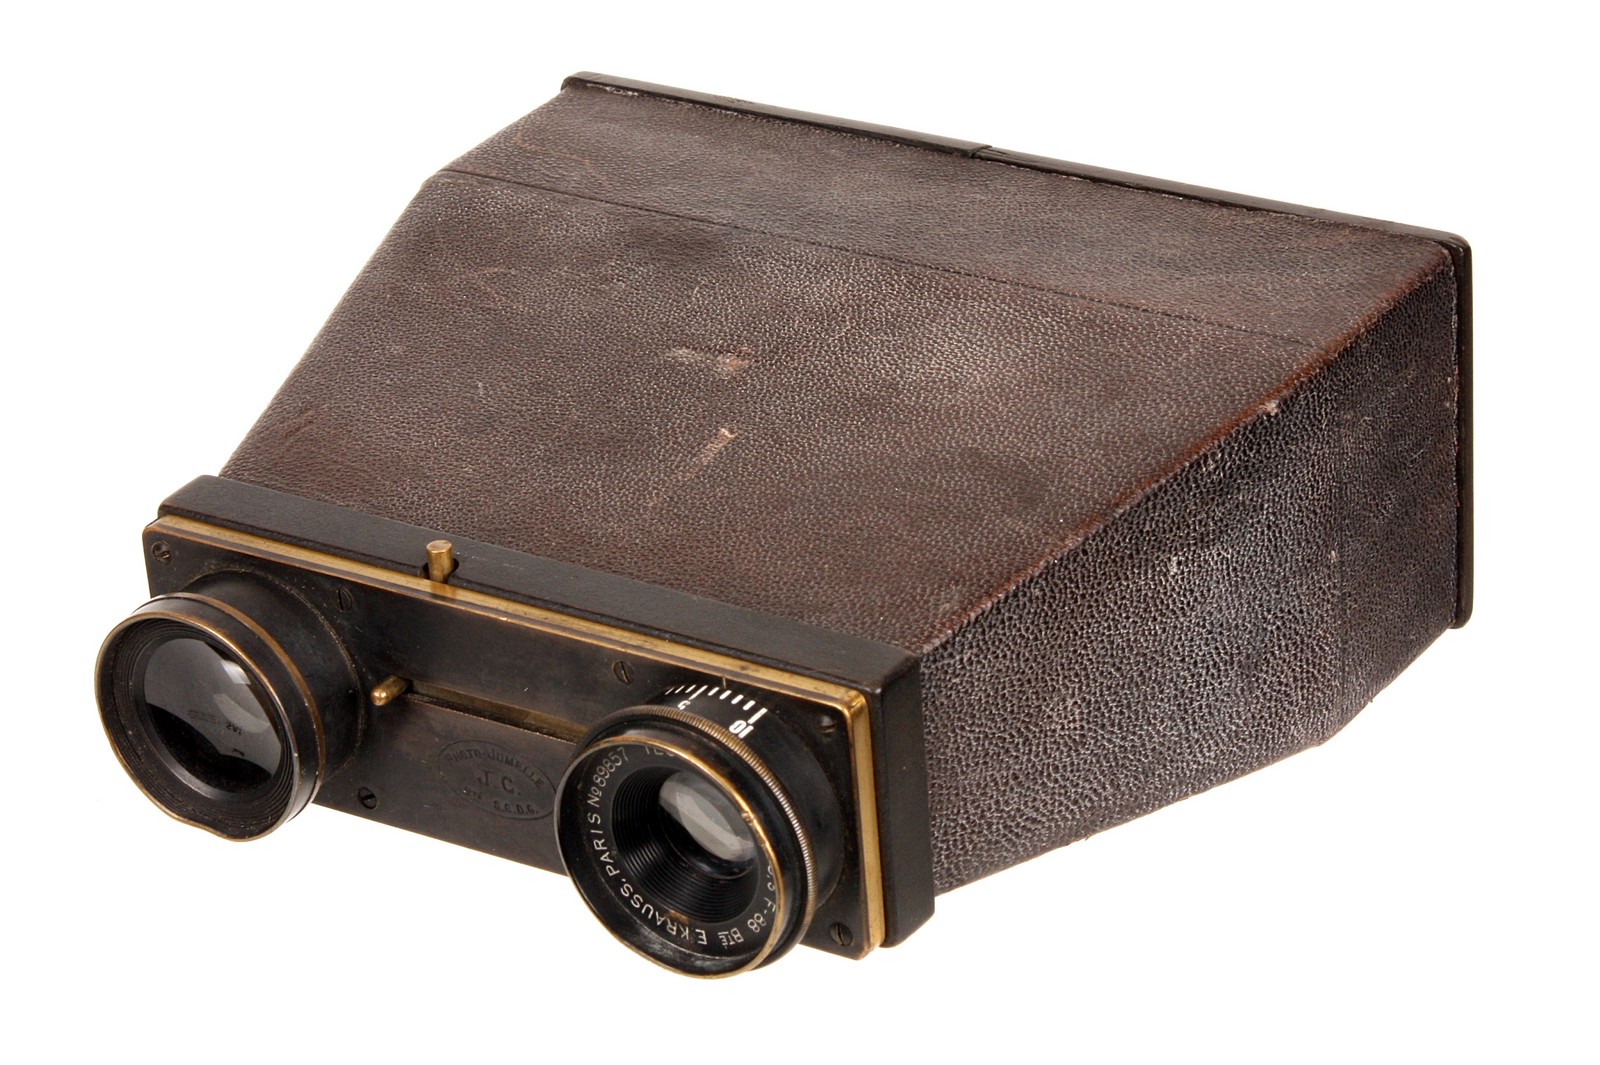 A Jules Carpentier Photo-Jumelle Camera, 4.5x6cm, serial no. 1456, with E. Krauss Tessar-Zeiss f/6.3